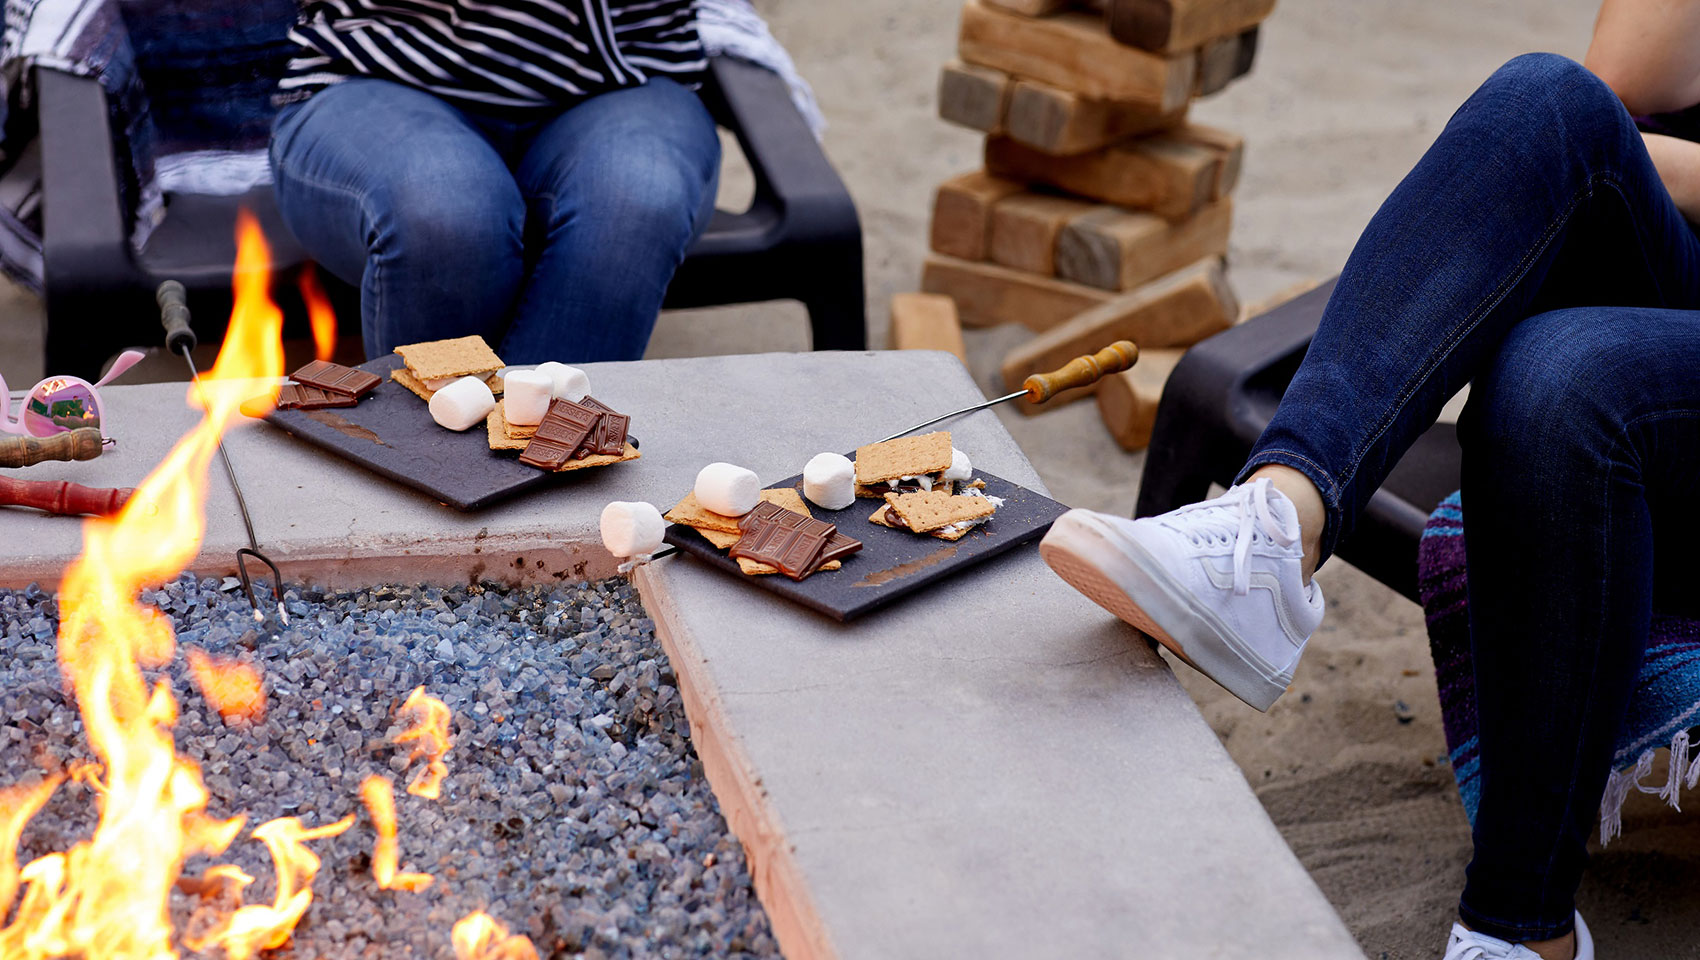 Kimpton Shorebreak guests roasting marshmallow